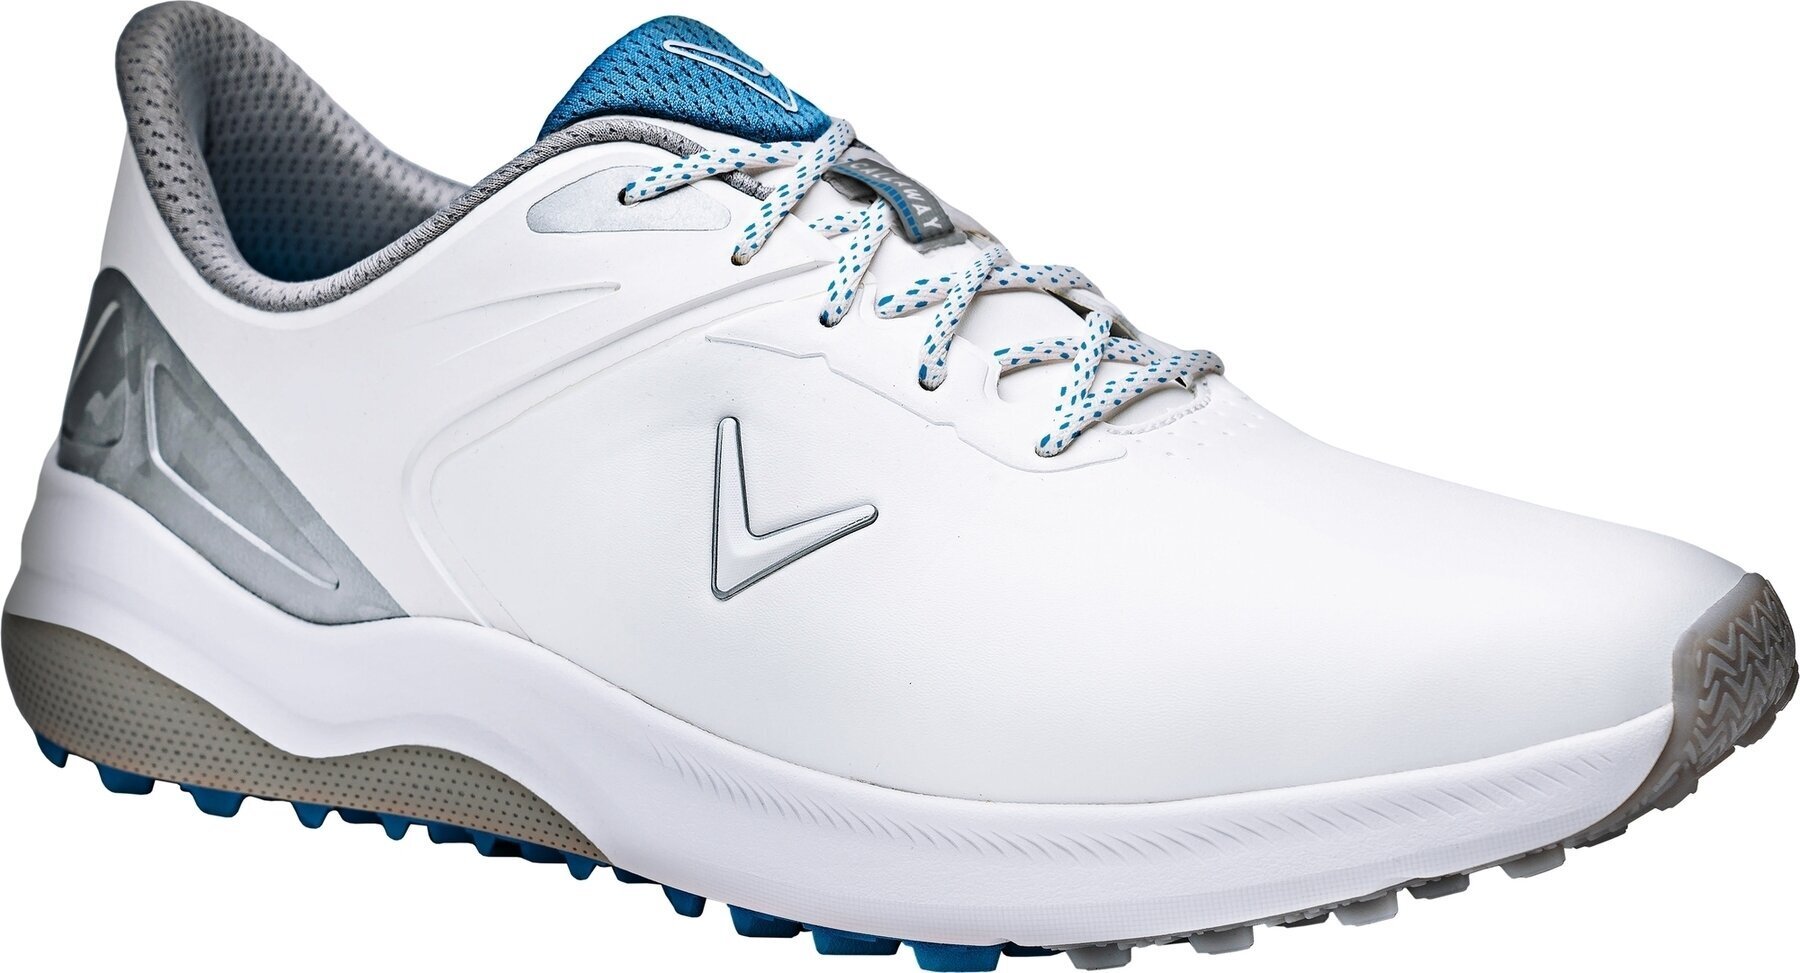 Miesten golfkengät Callaway Lazer Mens Golf Shoes White/Silver 46